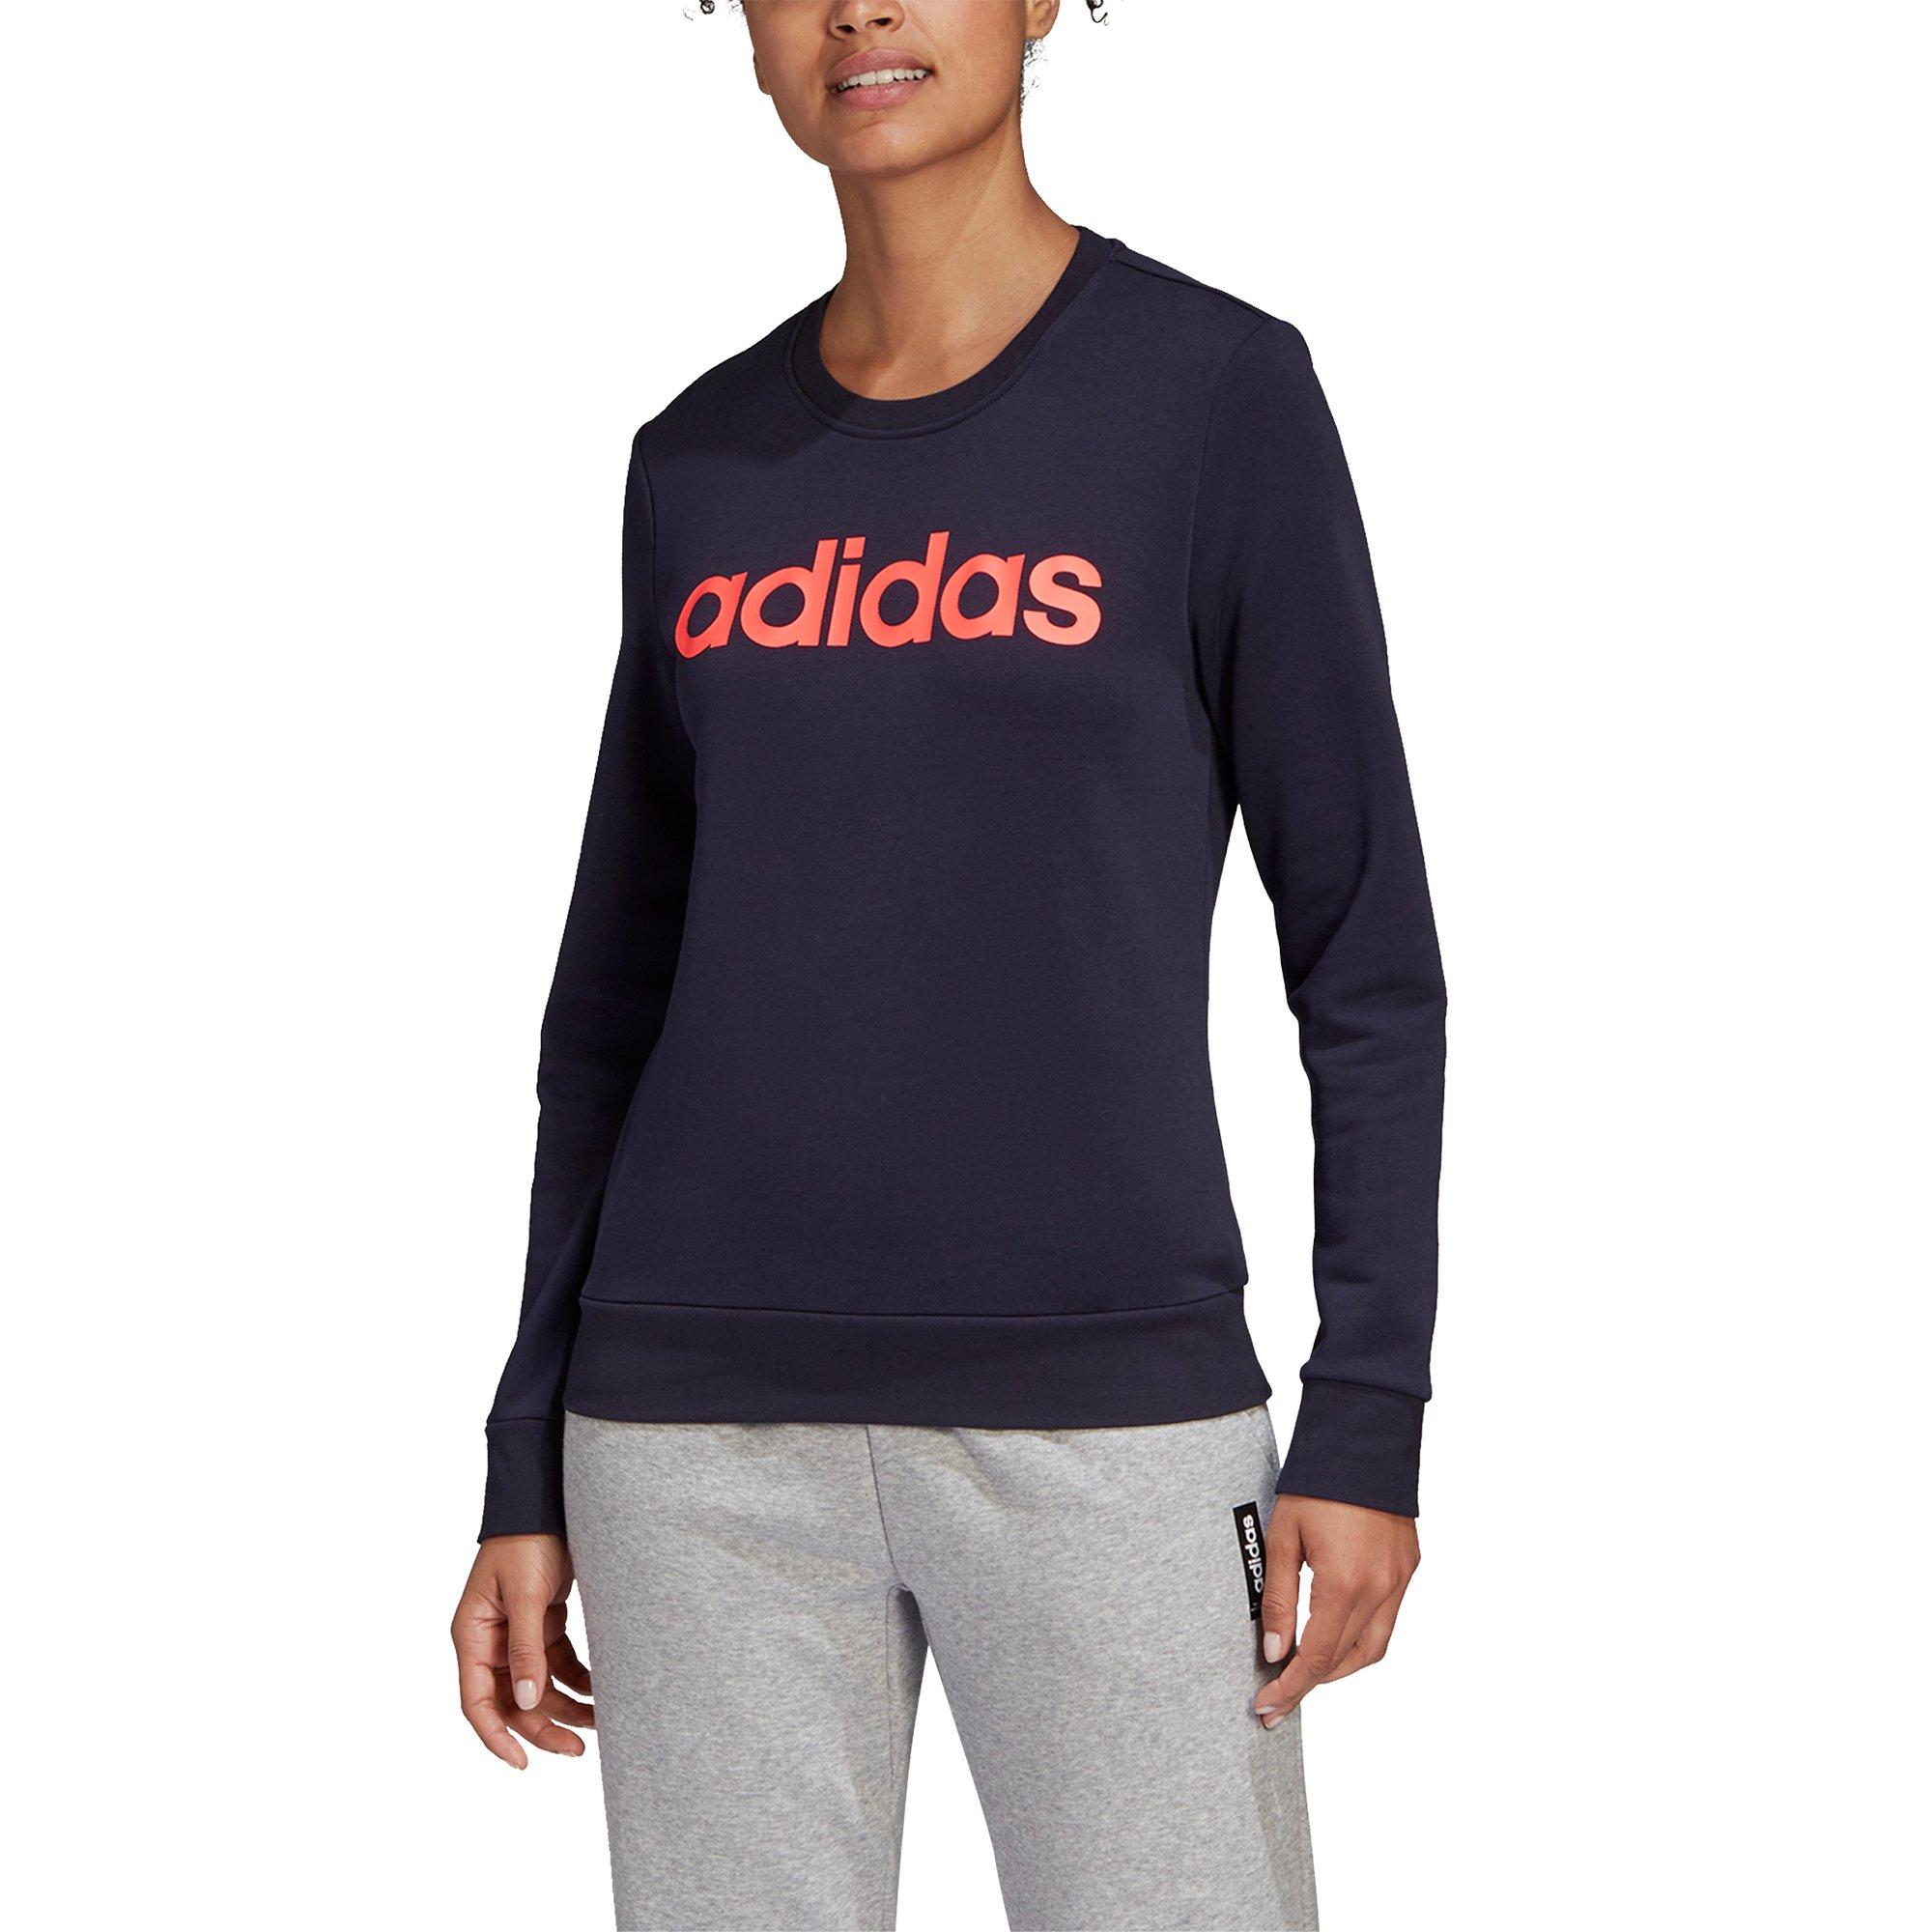 adidas women's essentials linear sweatshirt